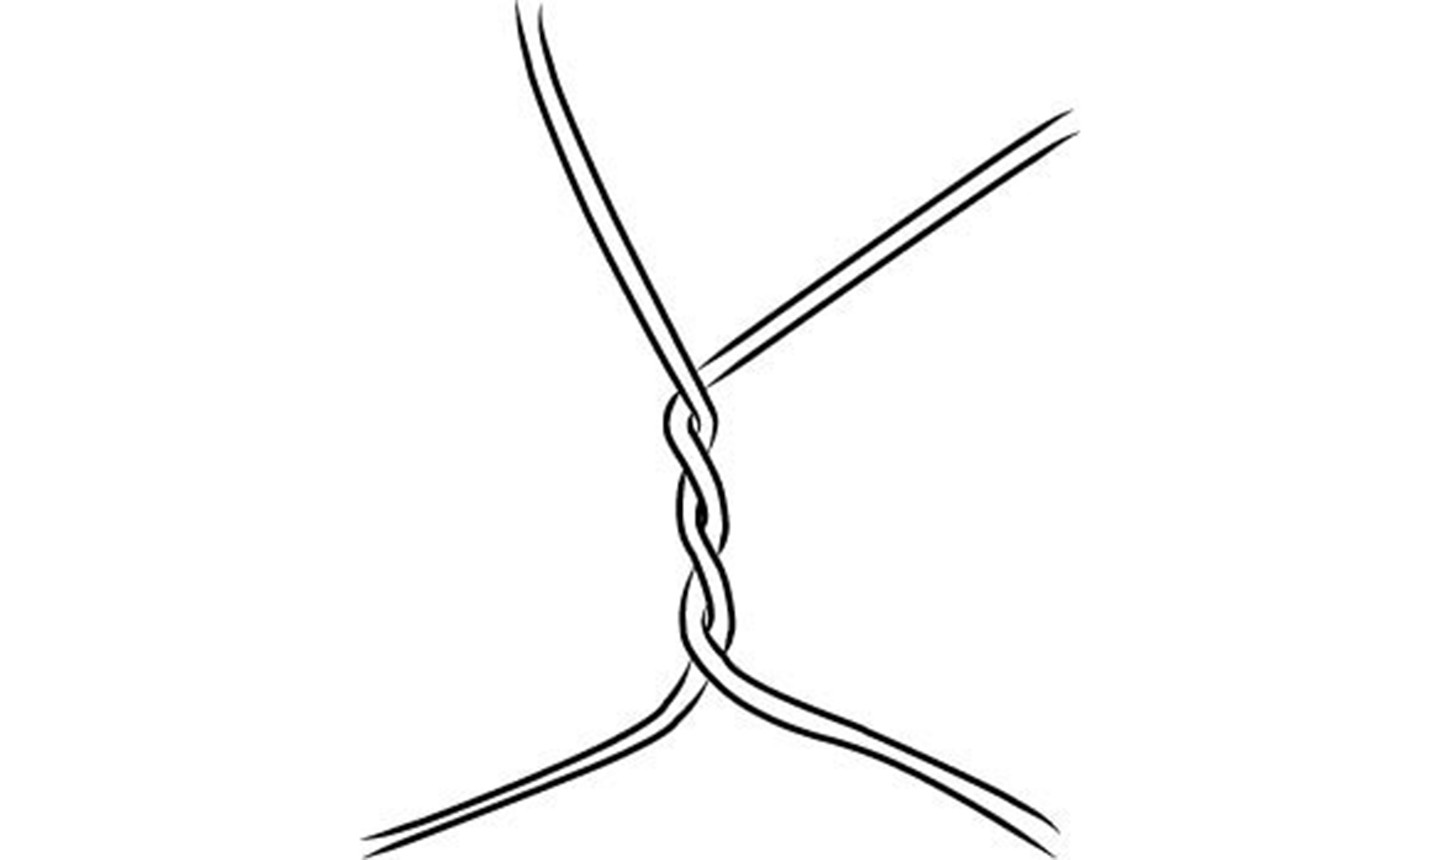 twisting wire illustrating